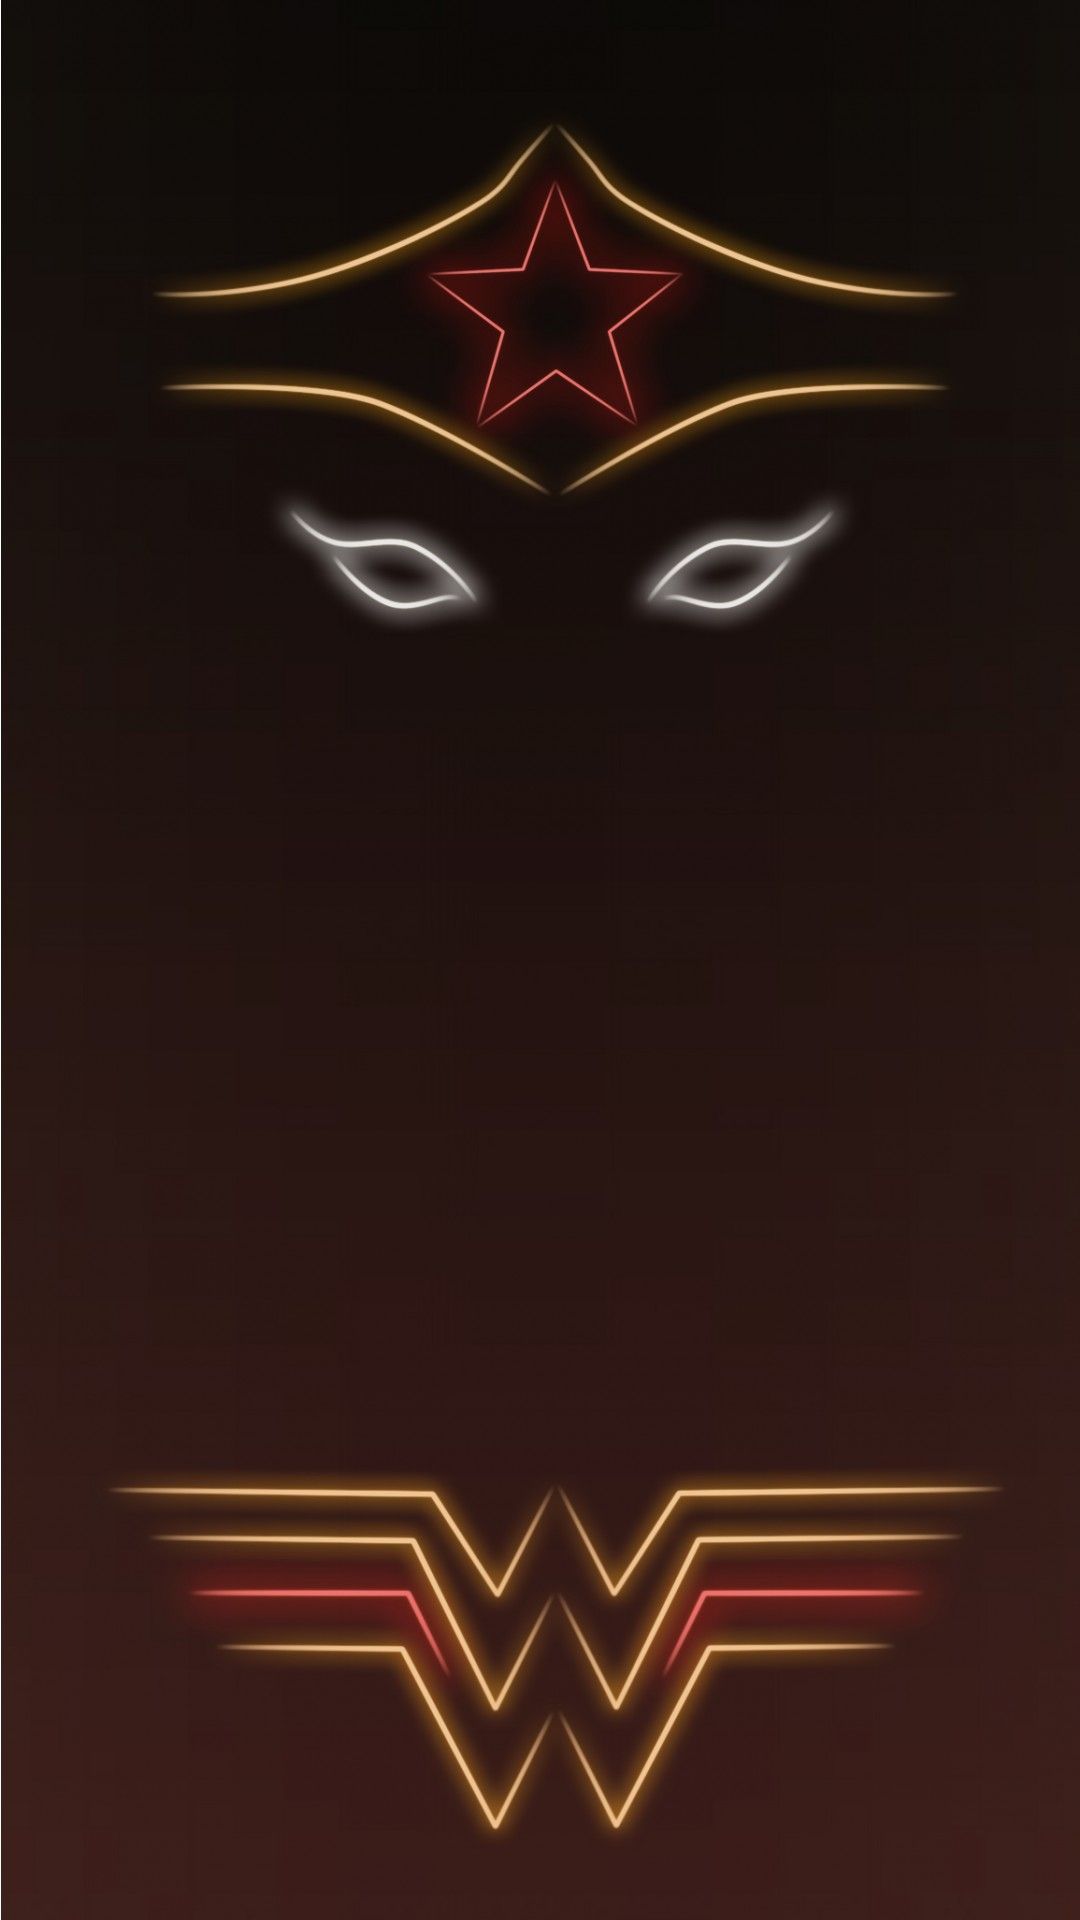 mulher maravilha wallpaper,fictional character,poster,emblem,logo,justice league